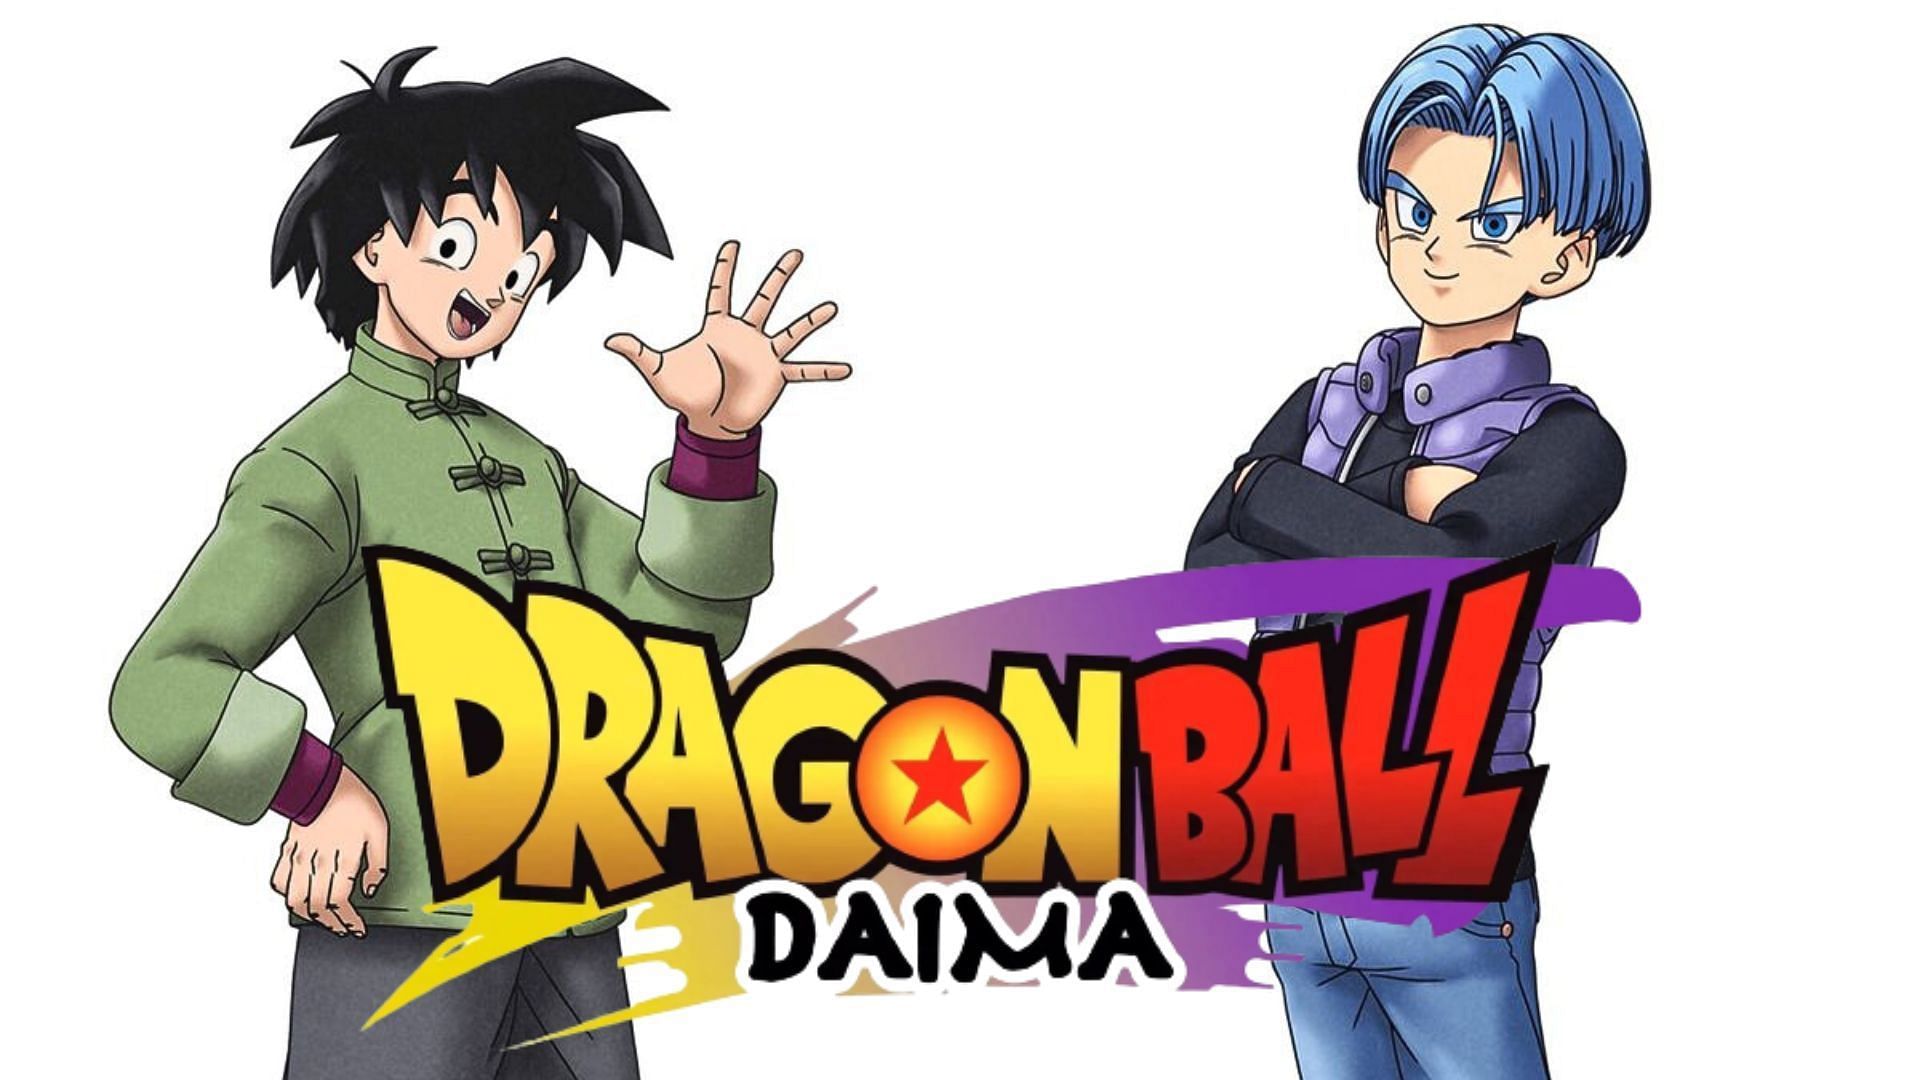 Data de lançamento de Dragon Ball Daima